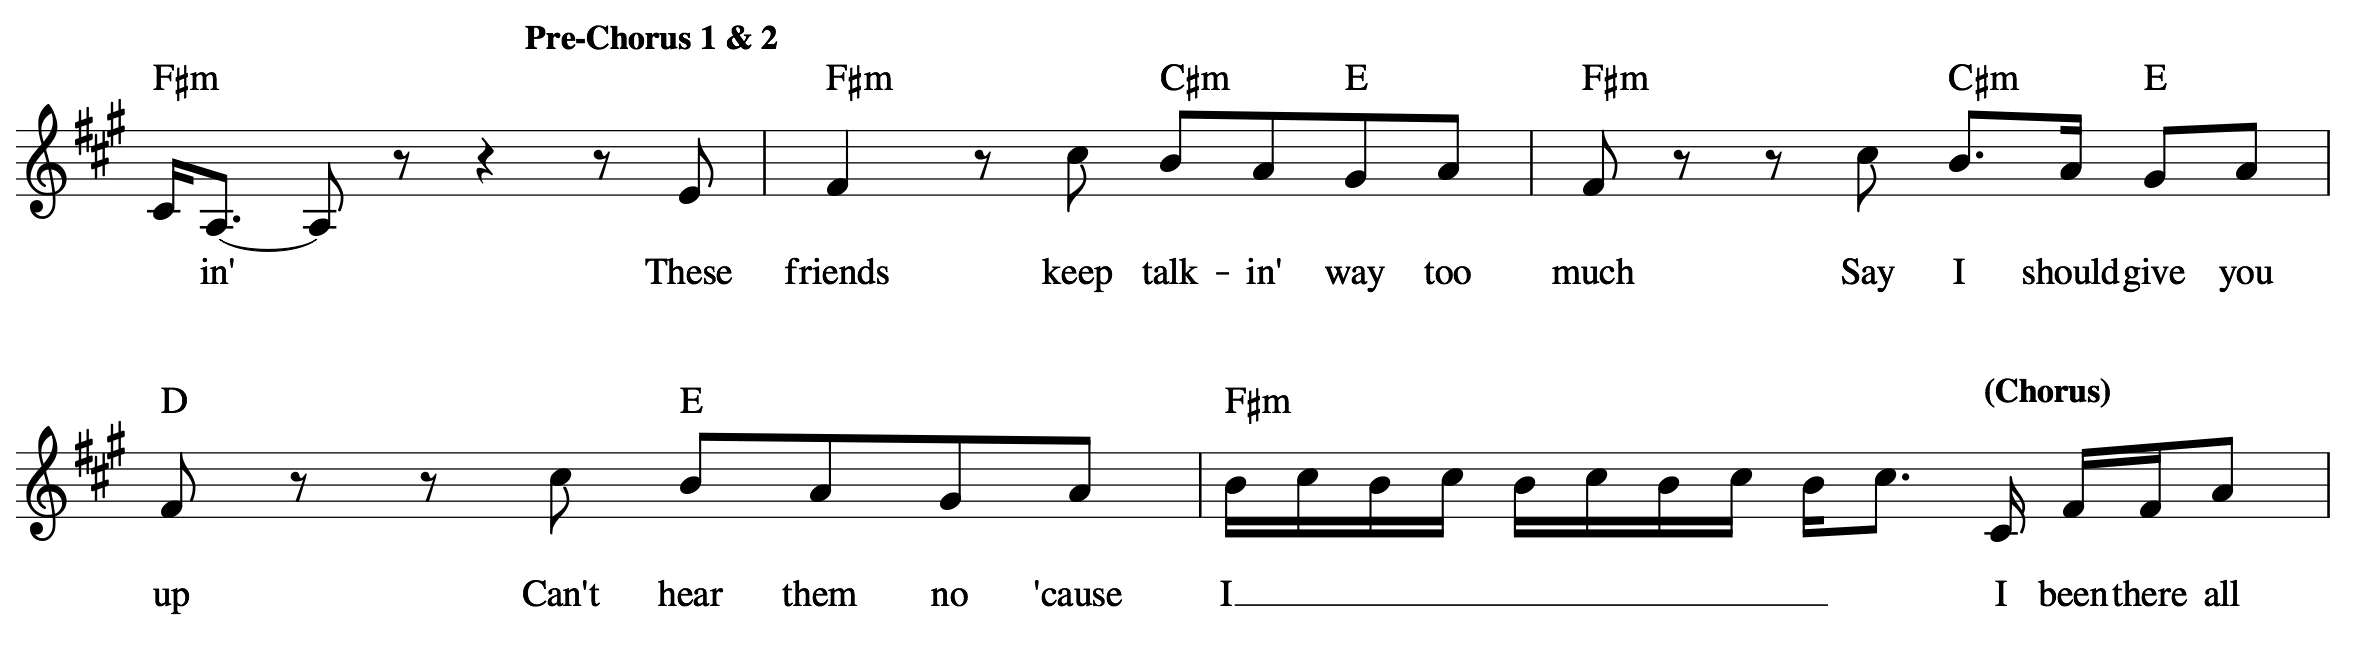 Pre-Chorus 1+2